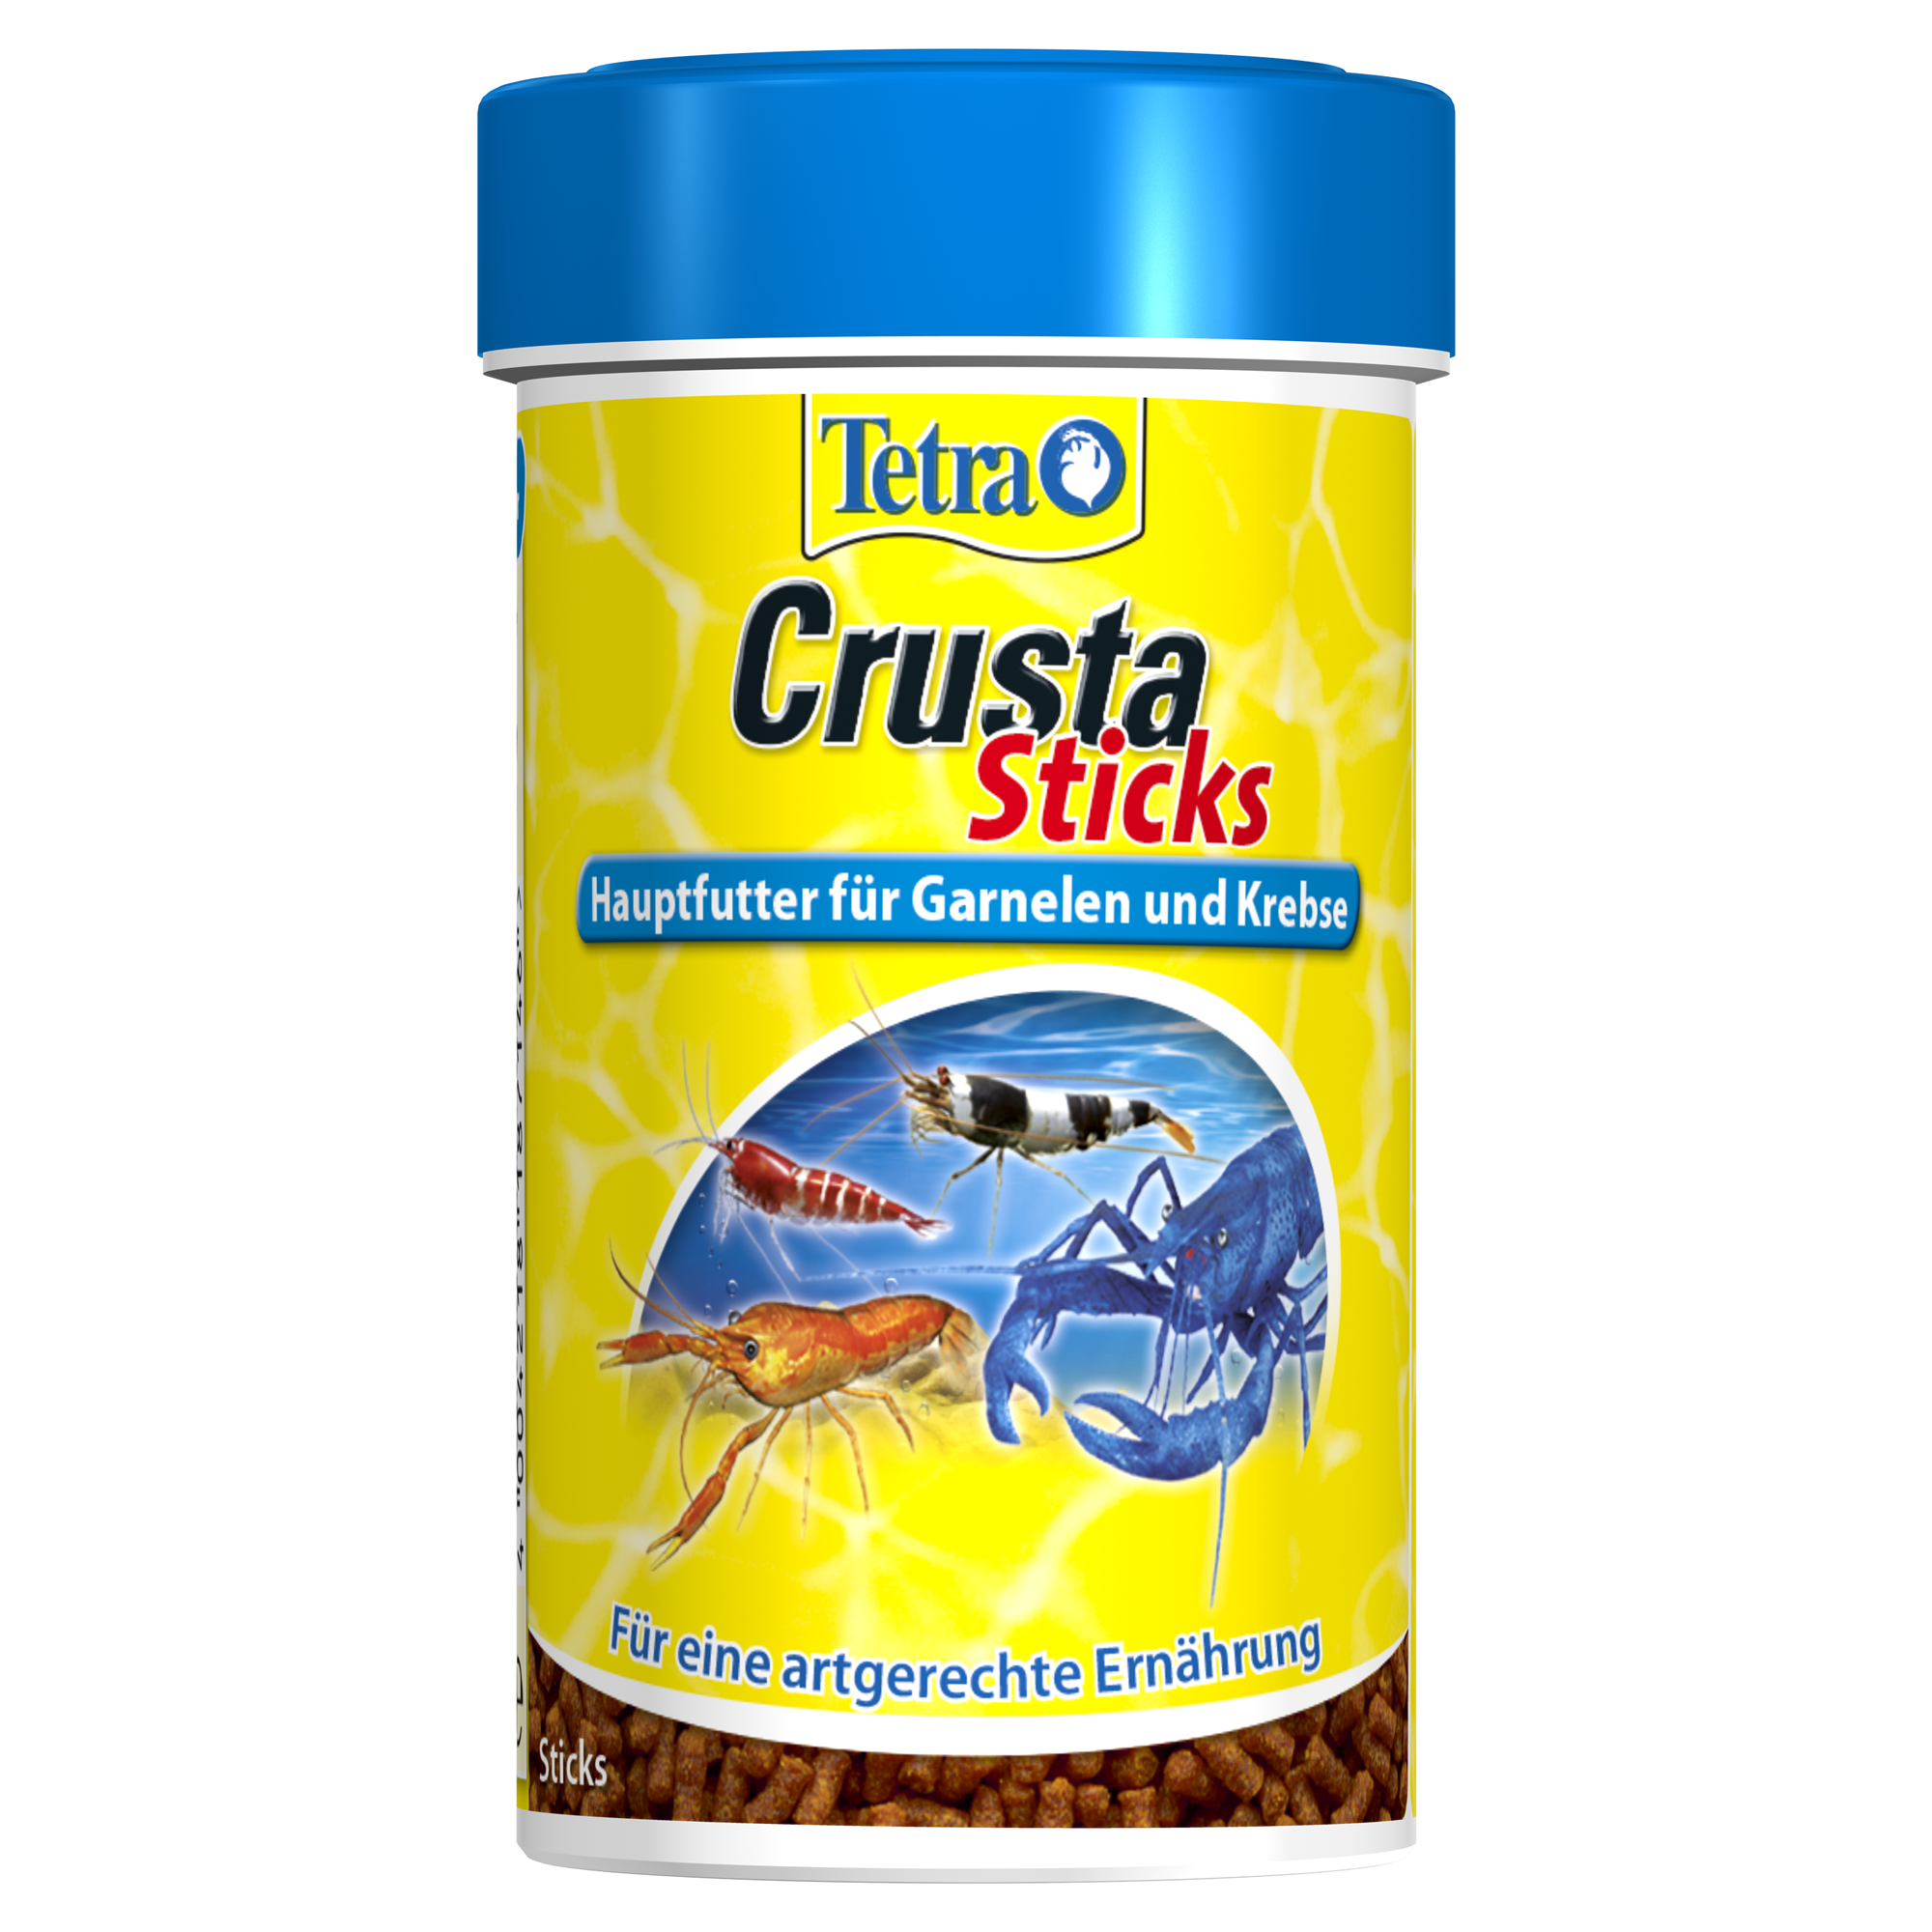 Krebsfutter "Crusta" Sticks 55 g + product picture